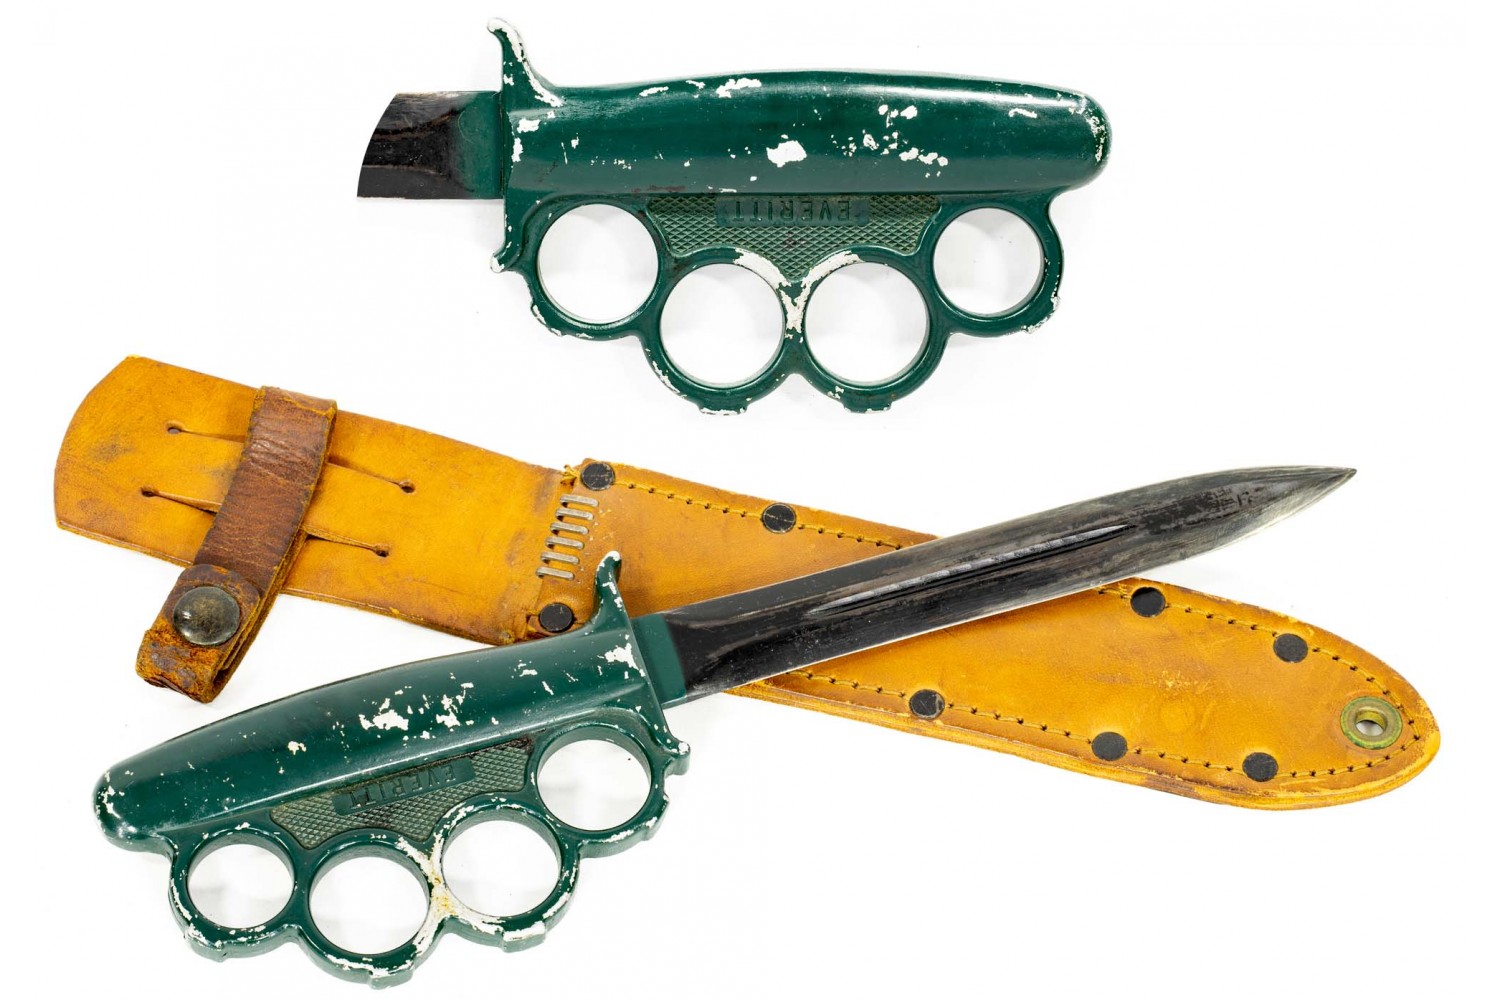 Everitt Knuckle Knife - Very Fine & Scarce Green Handled WWII